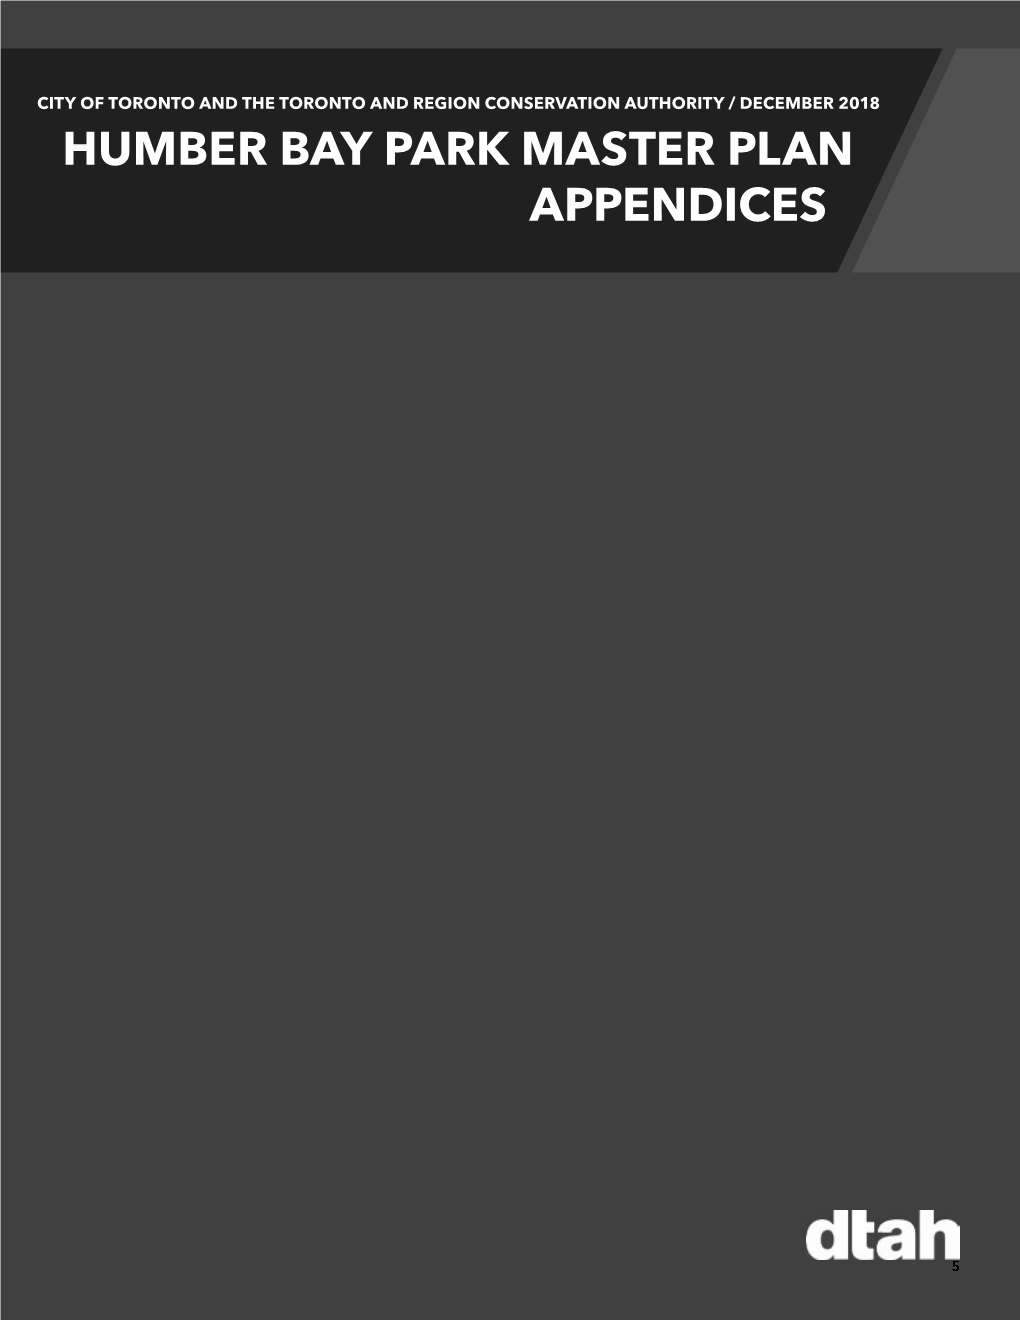 Humber Bay Park Master Plan Appendices